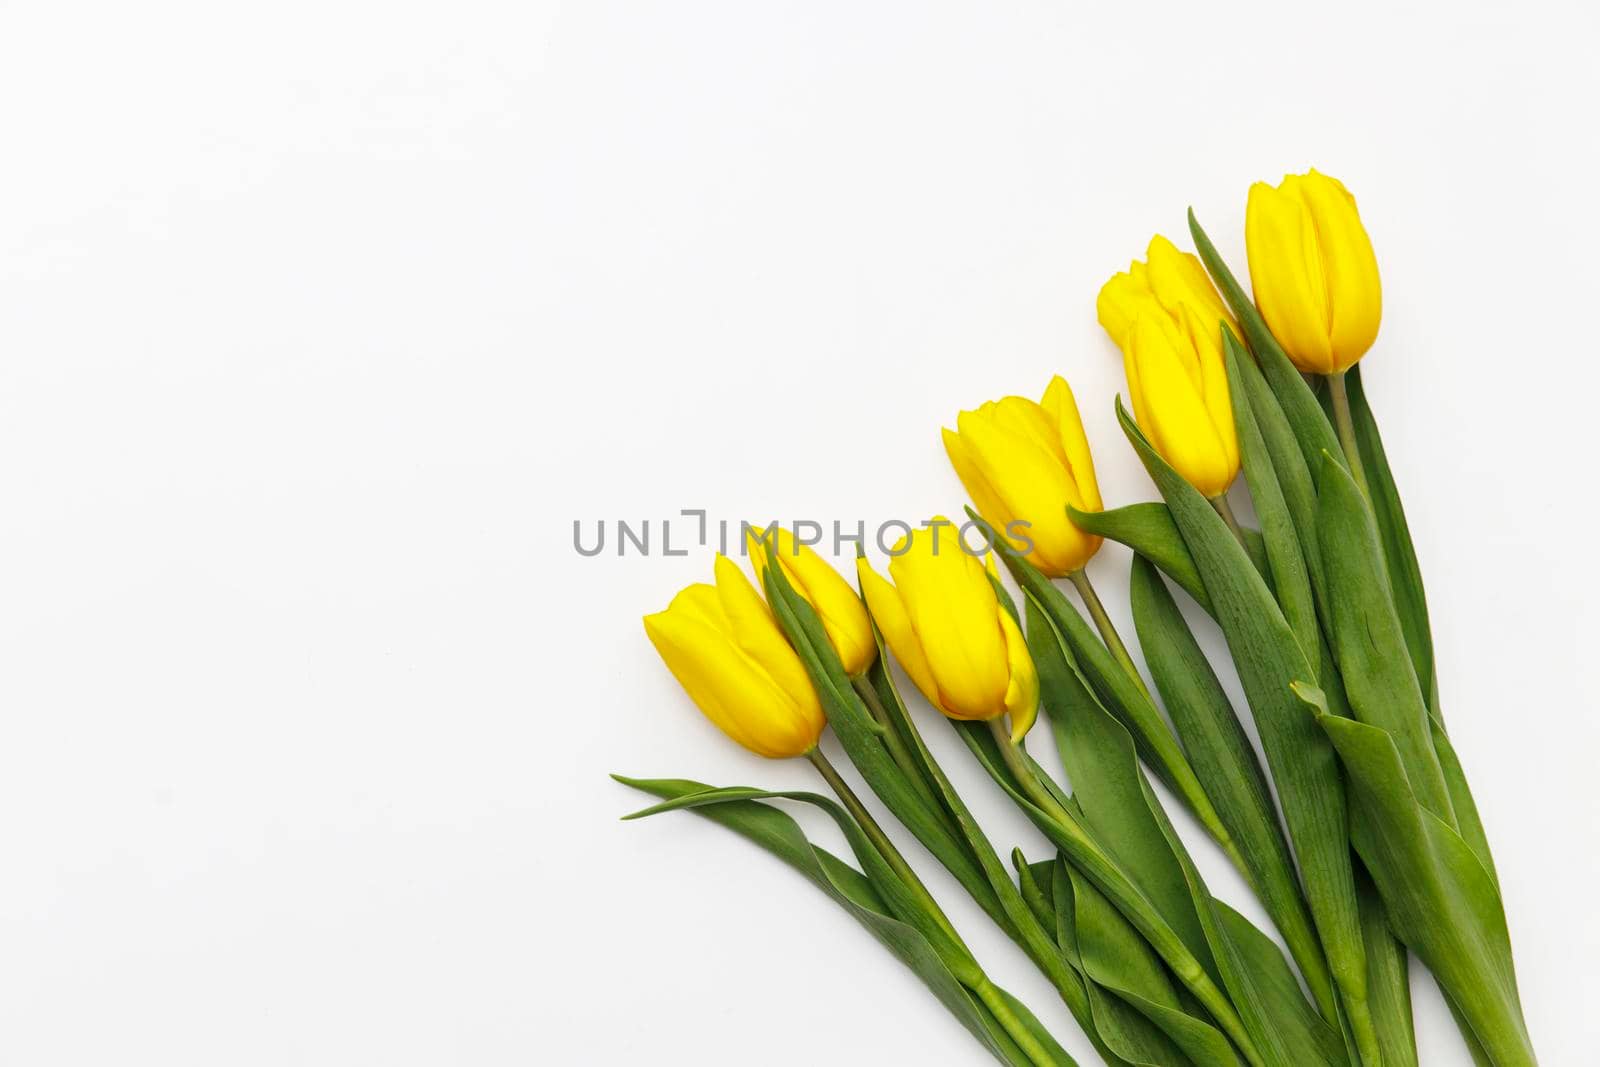 layout of yellow tulips on a white background by elenarostunova